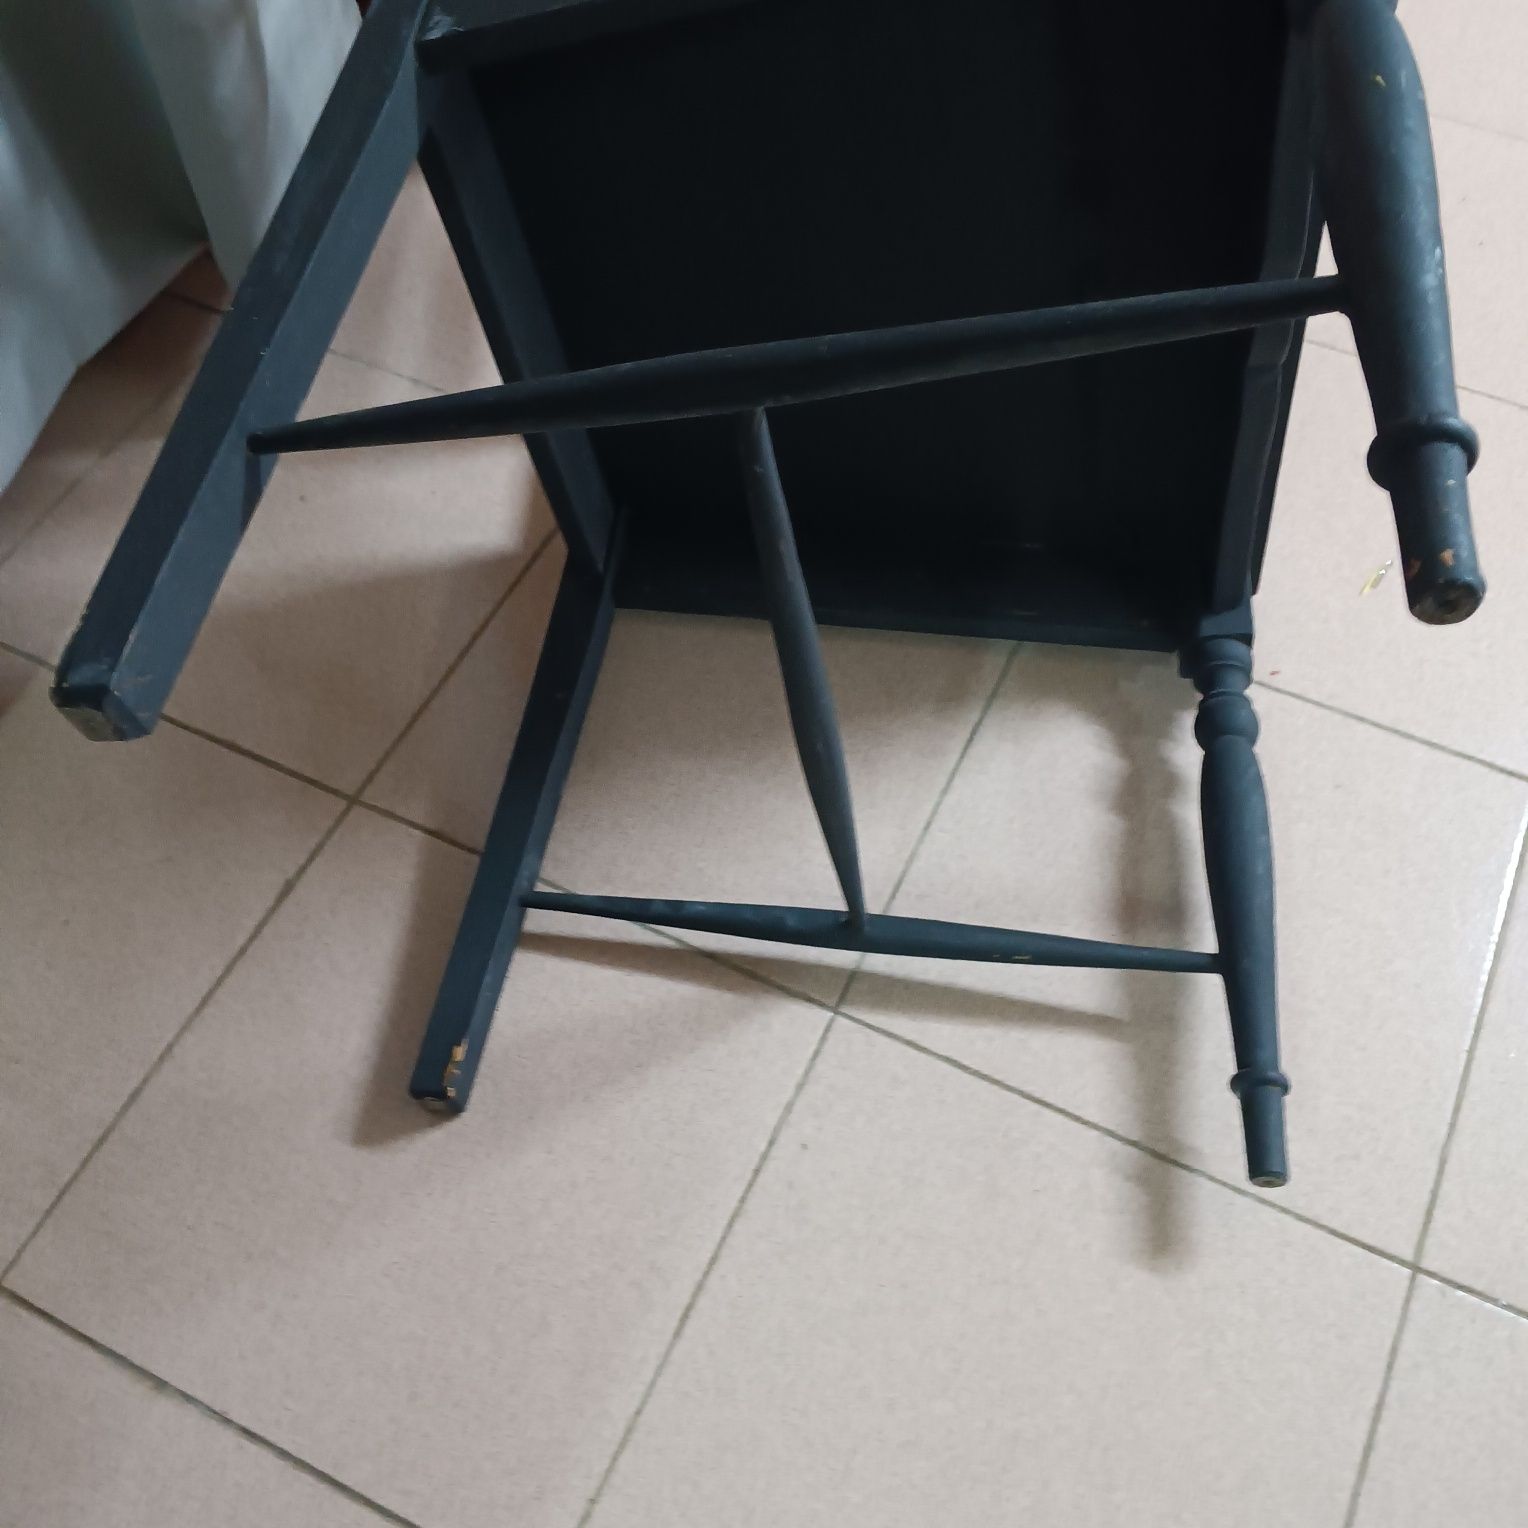 Cadeirao antigo pintado preto